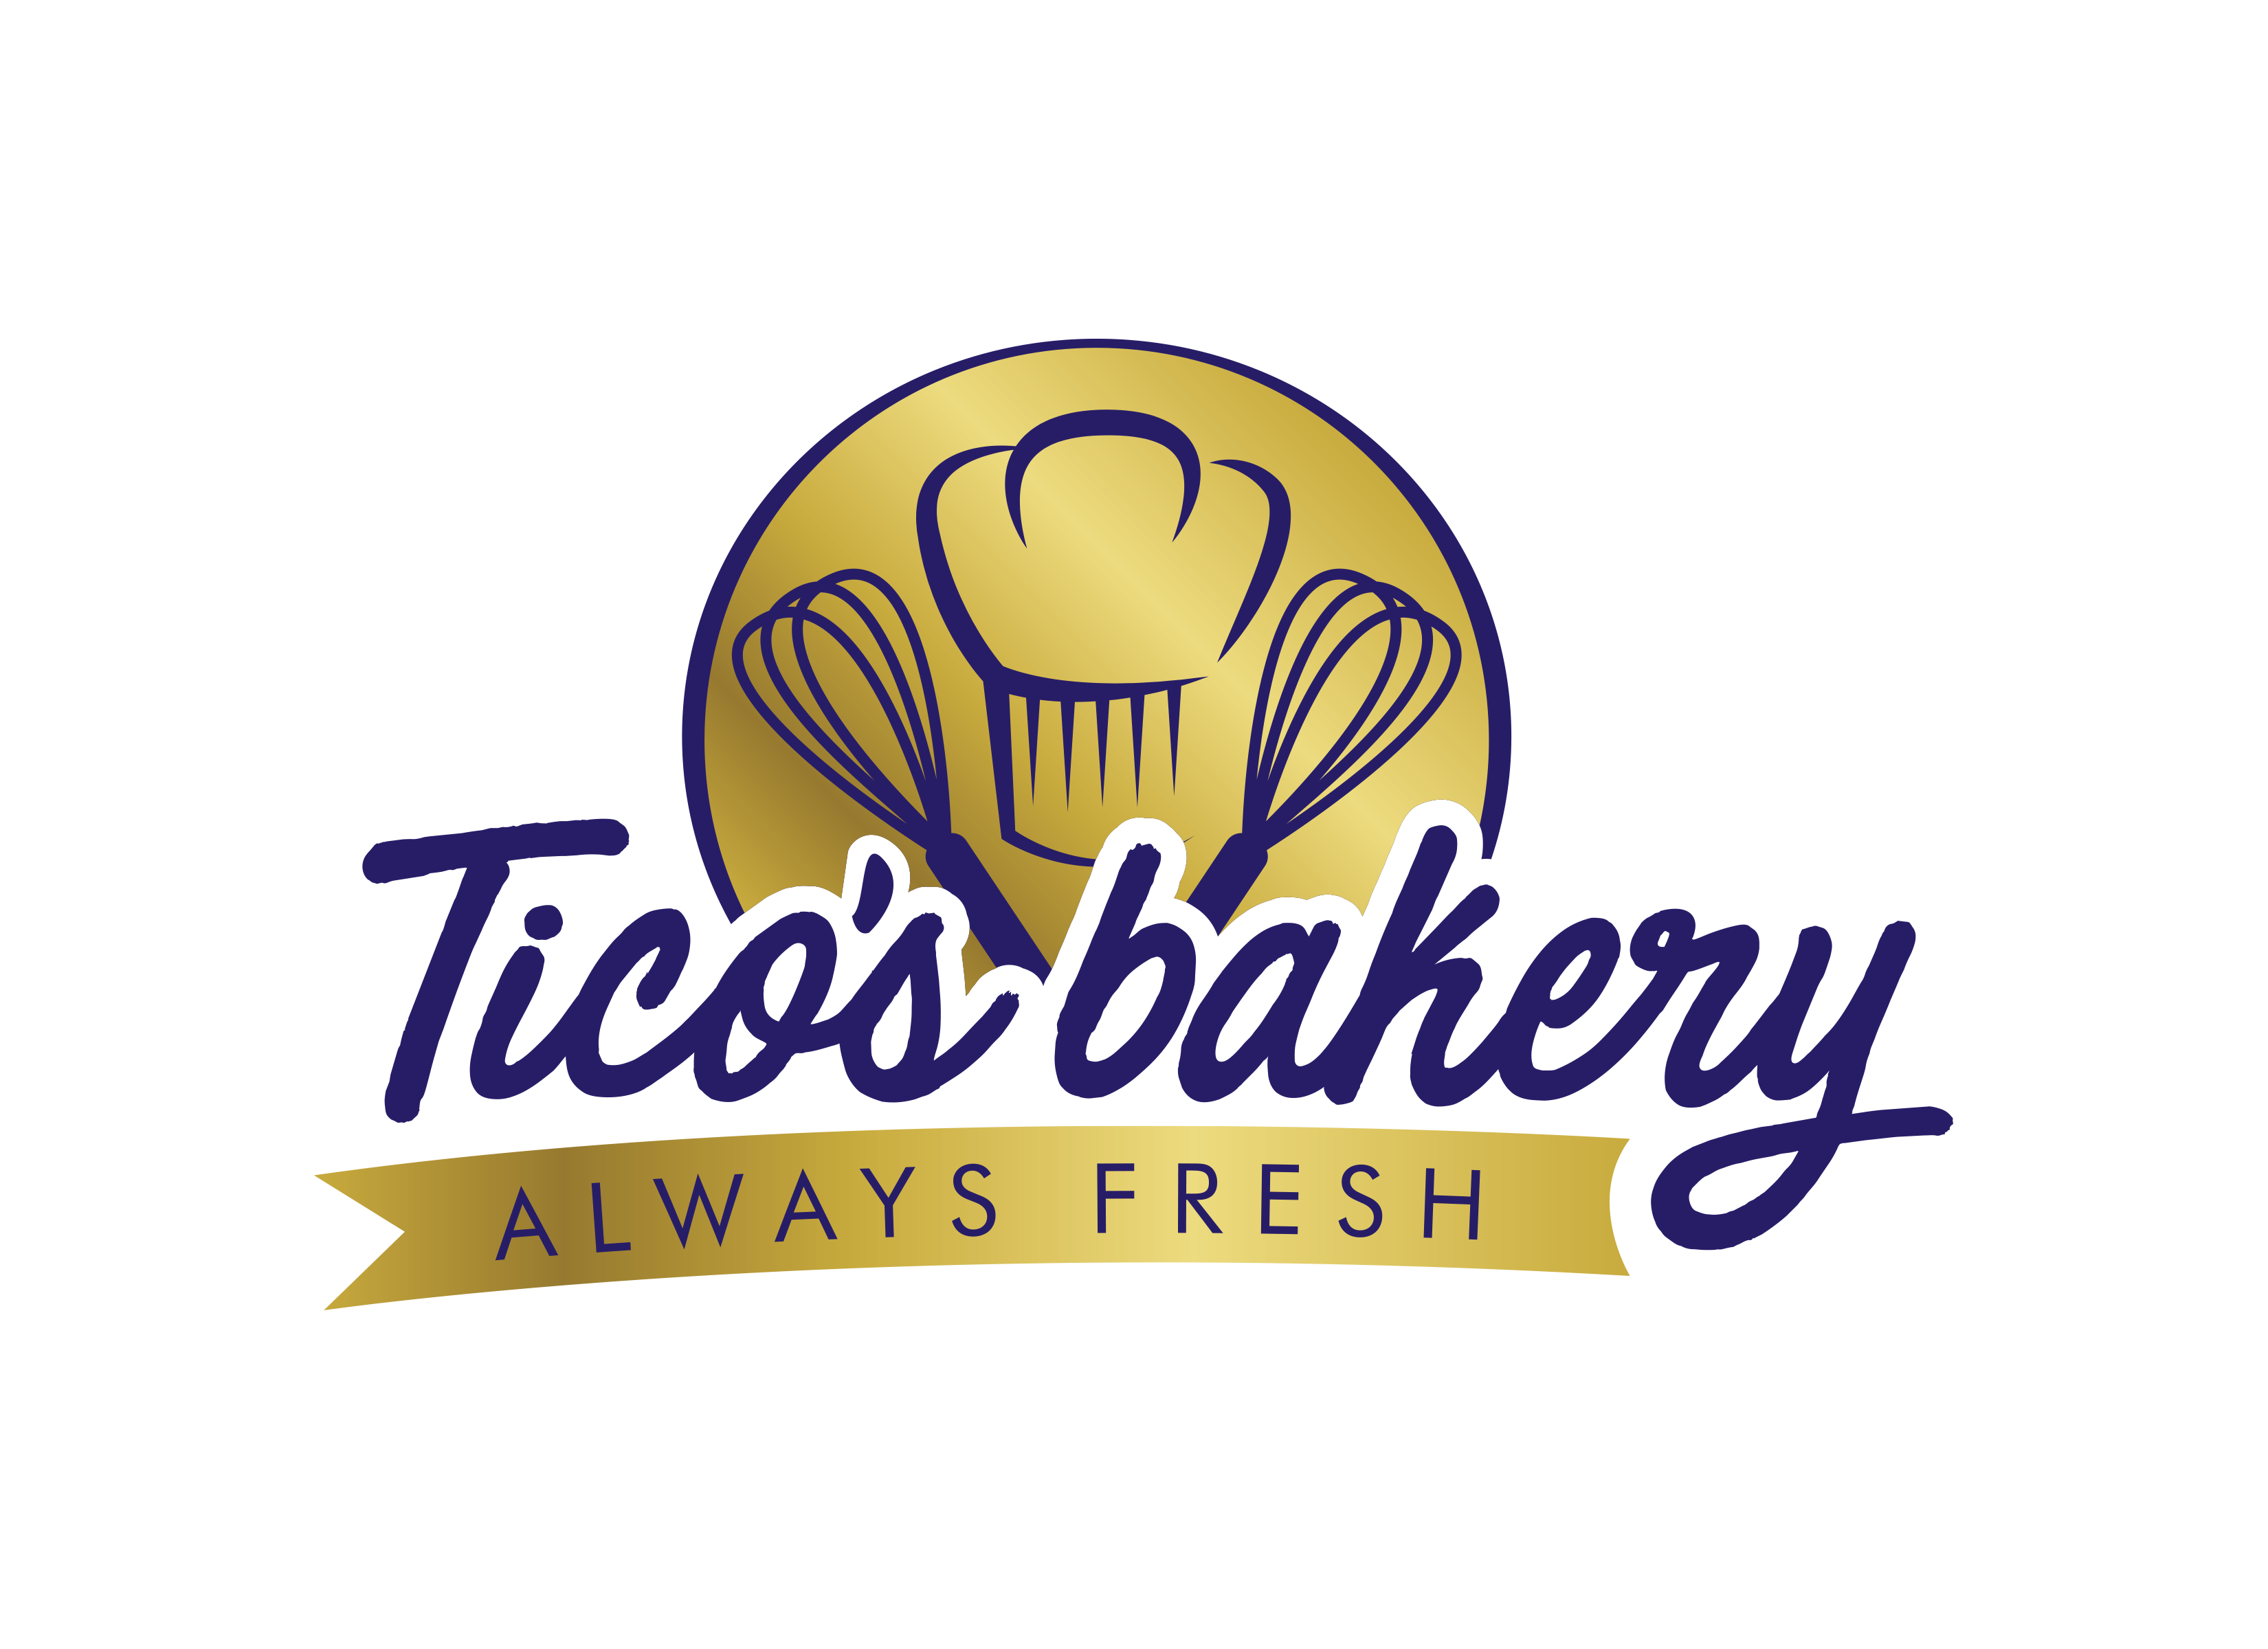 Ticos bakery